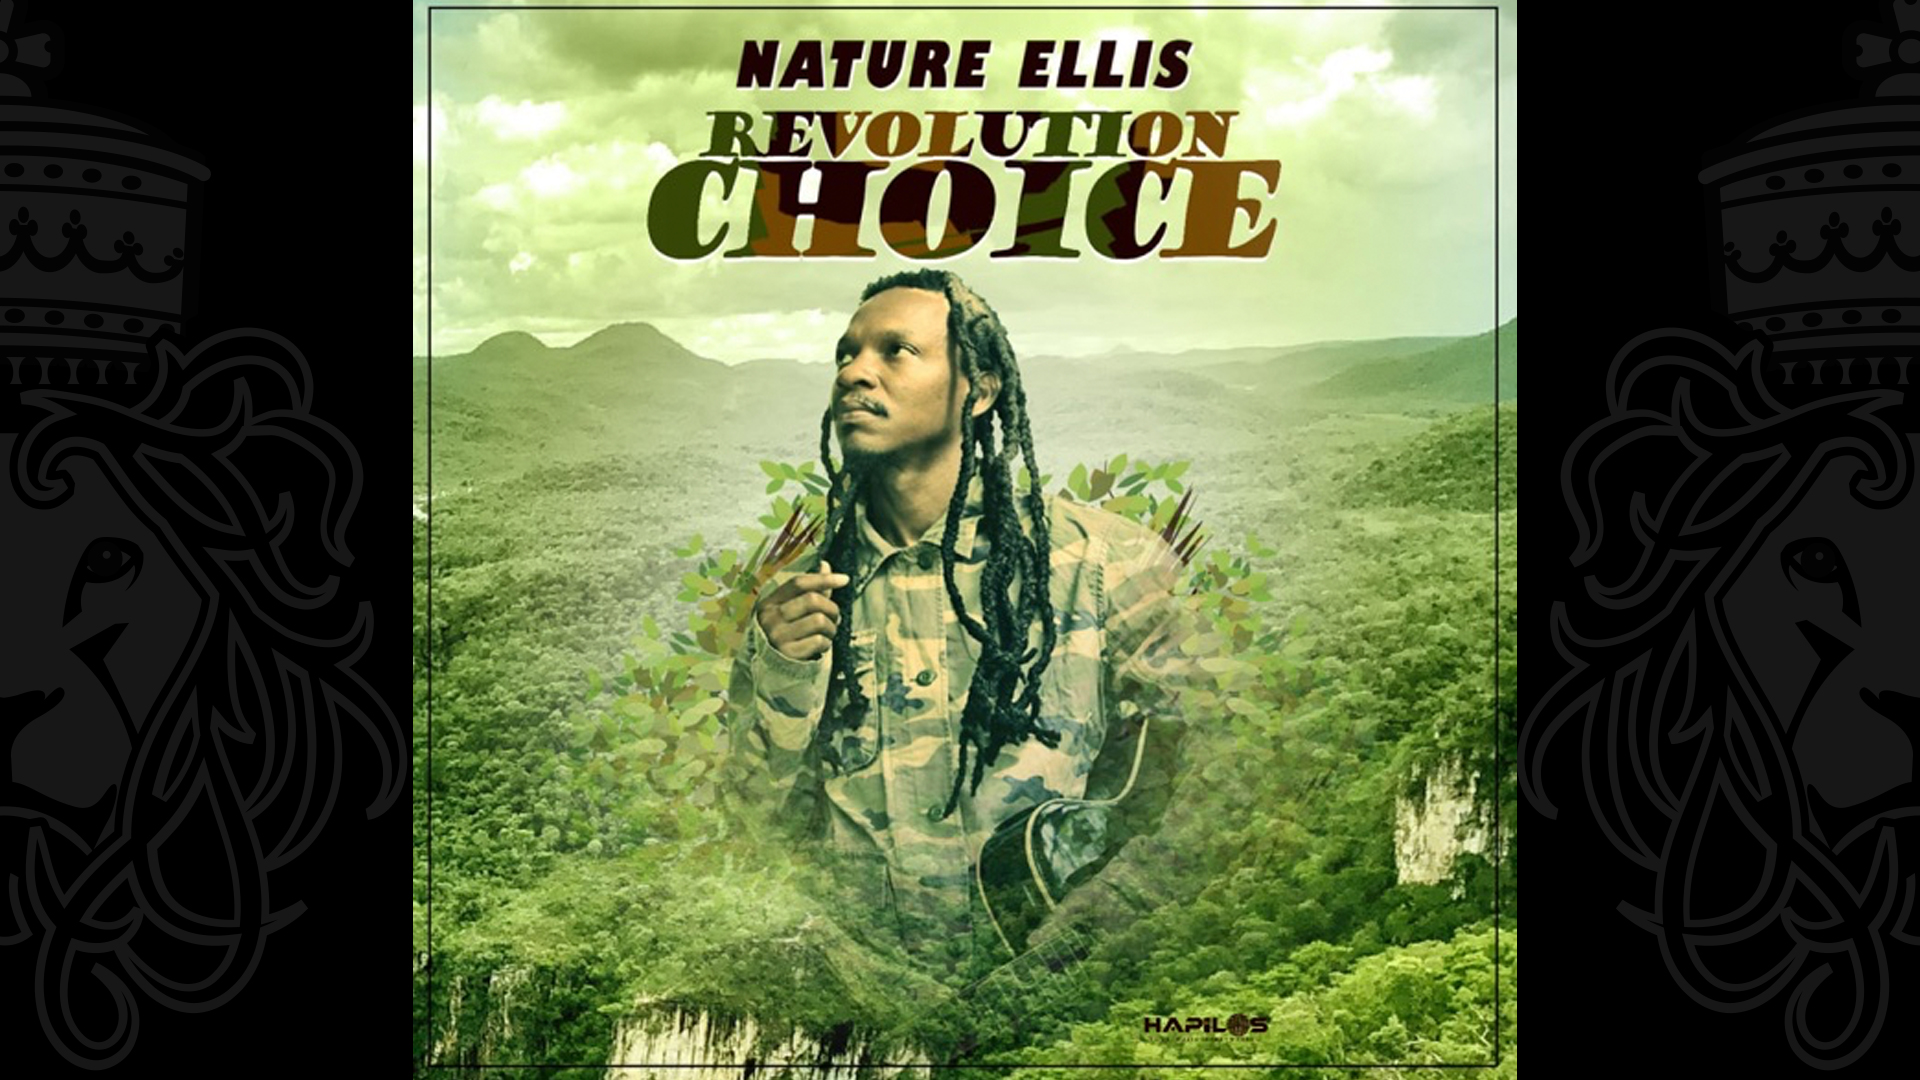 revolution choice Nature Ellis